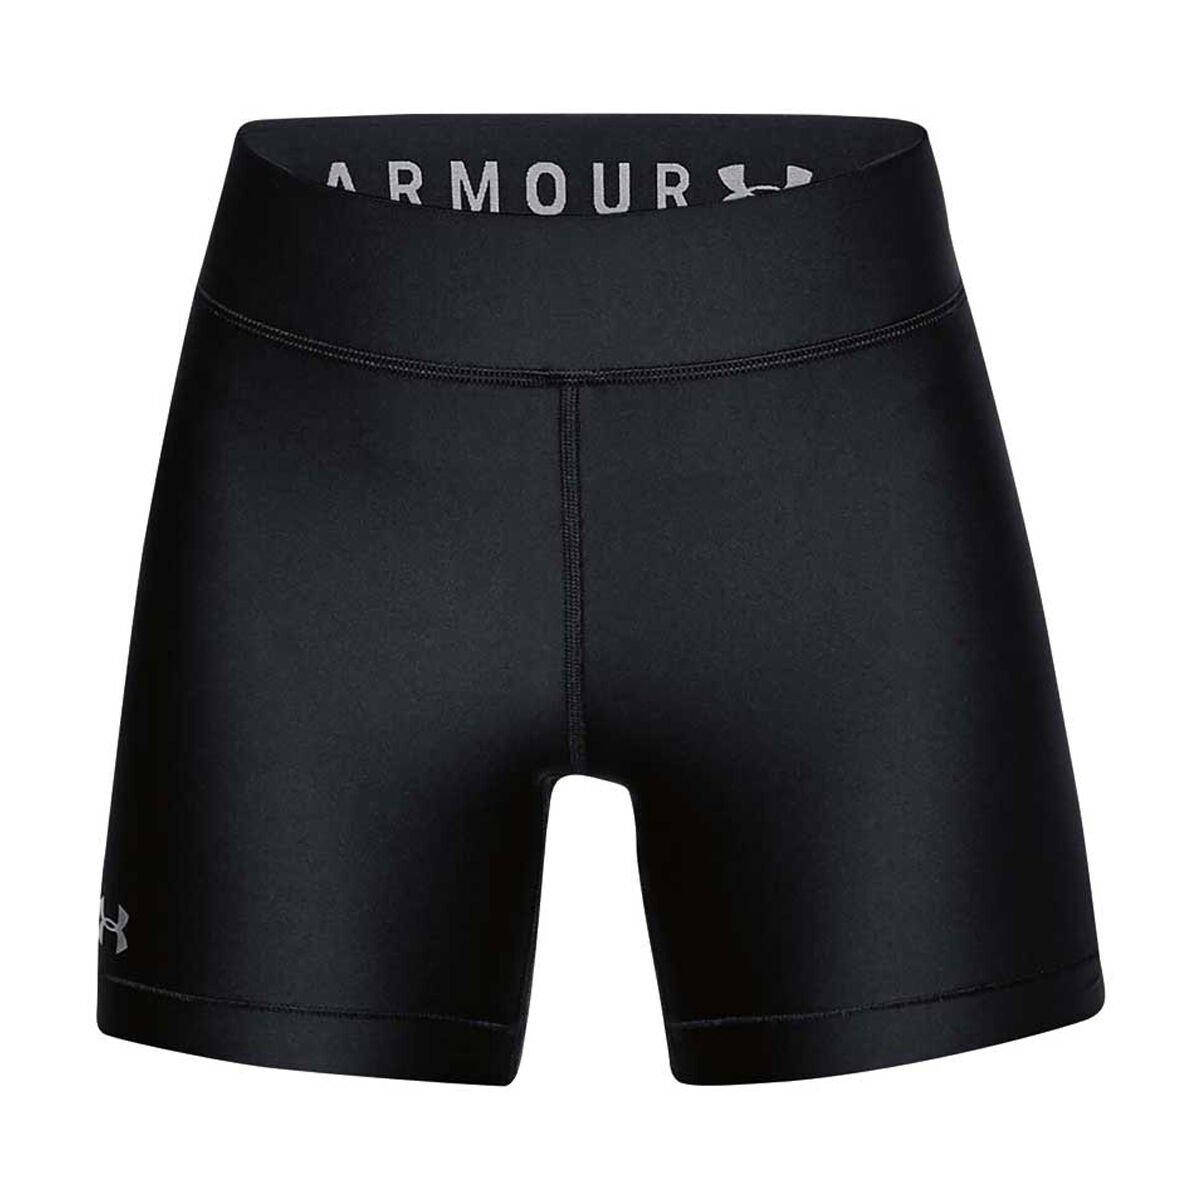 under armor shorts womens